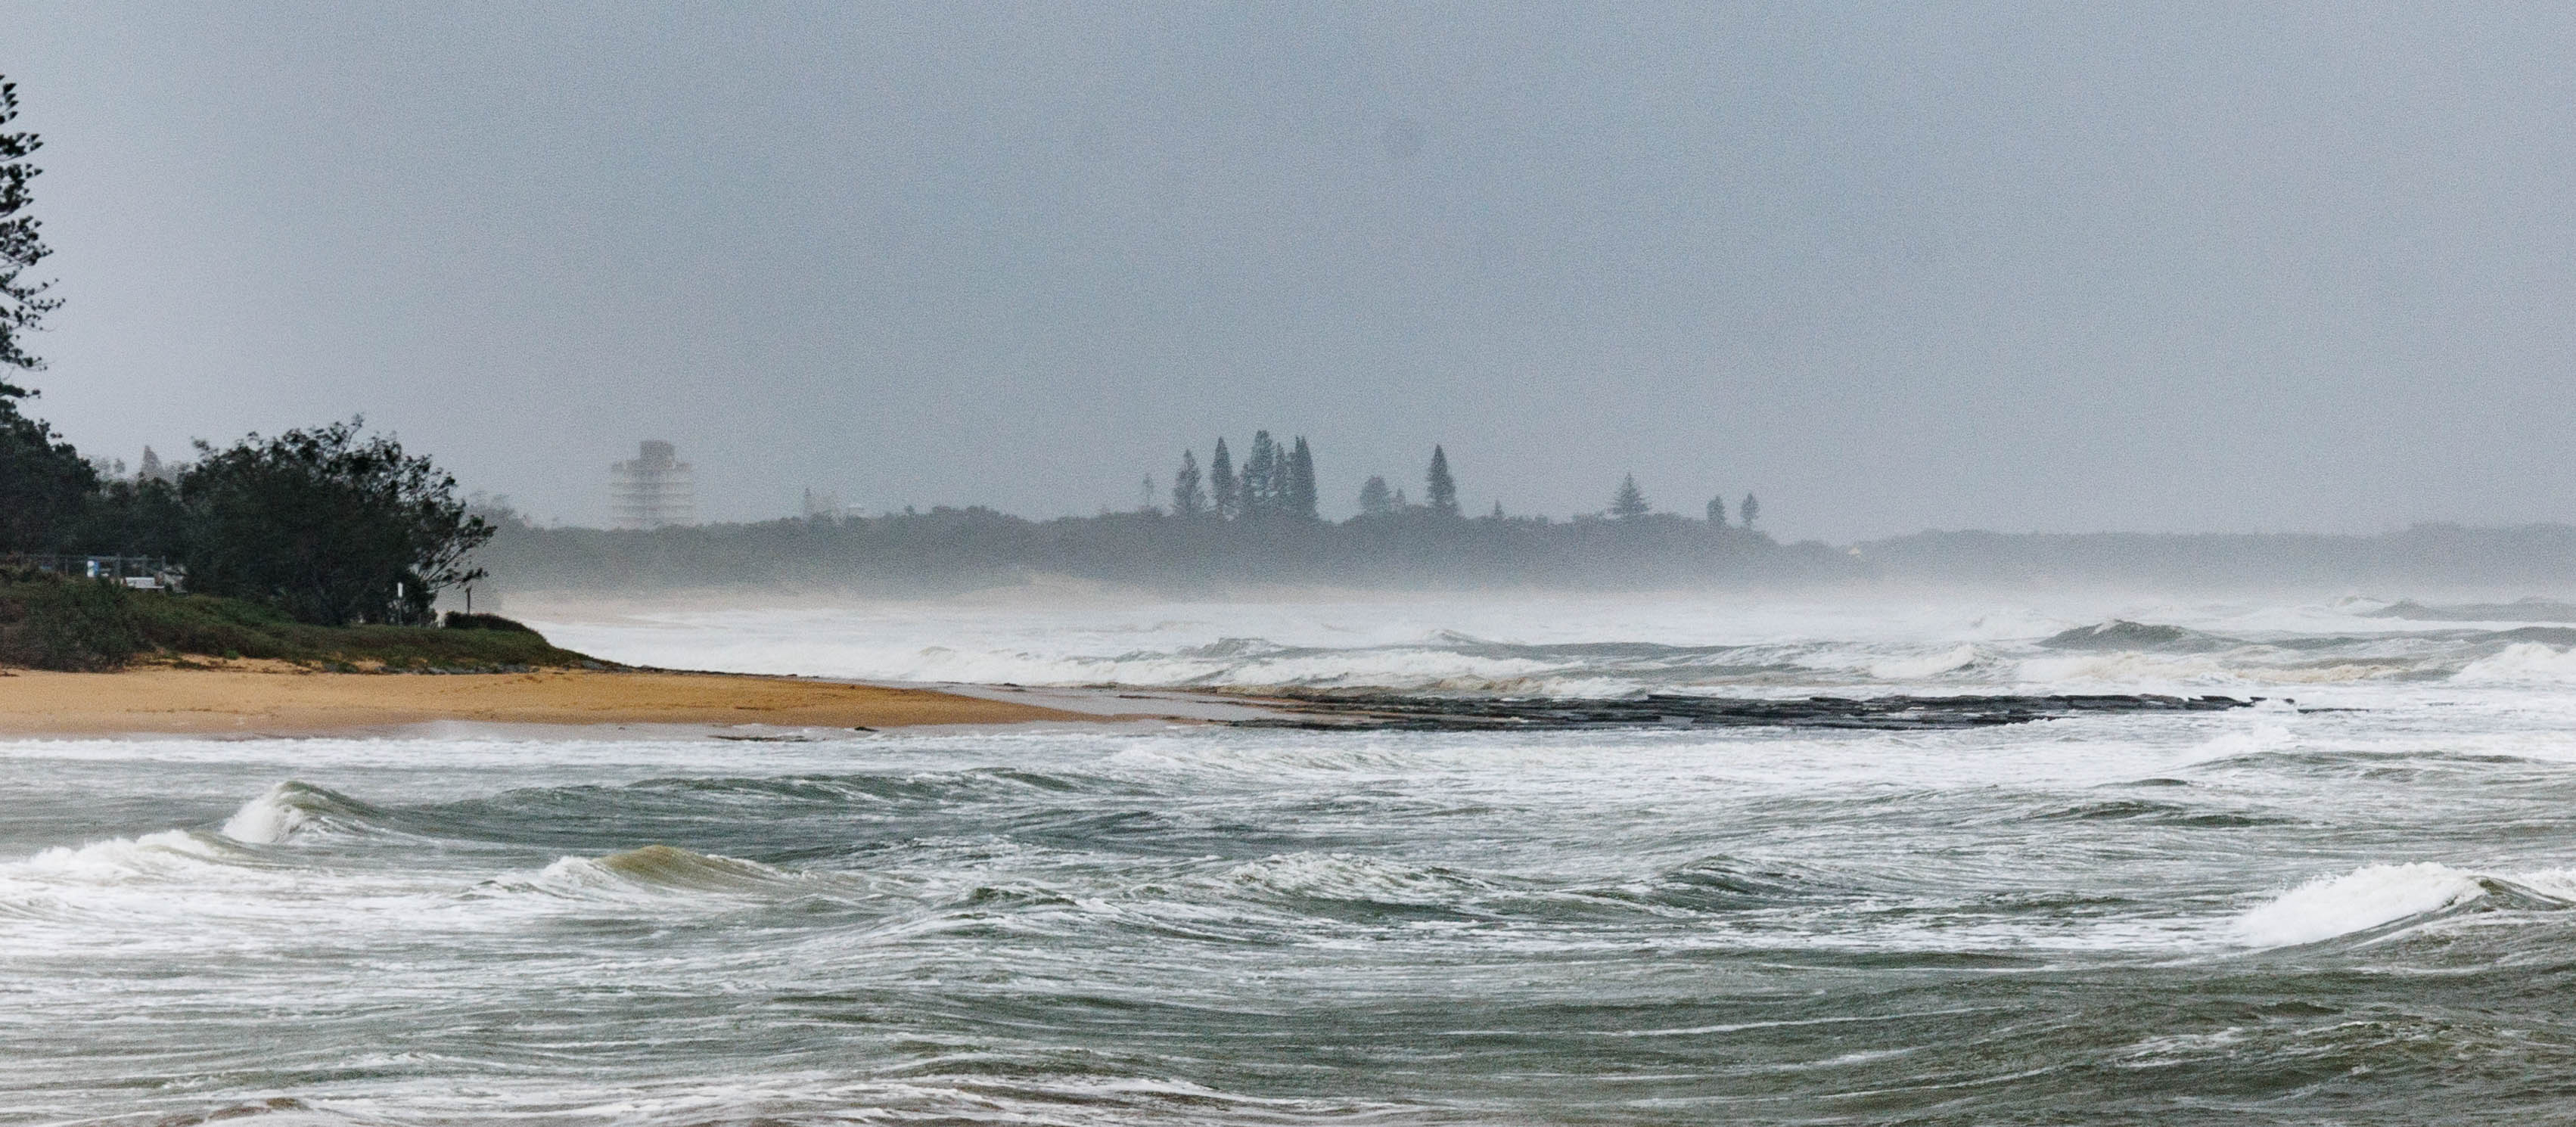 BEACHES IN THE RAIN---SUNSHINE COAST AUSTRALIA